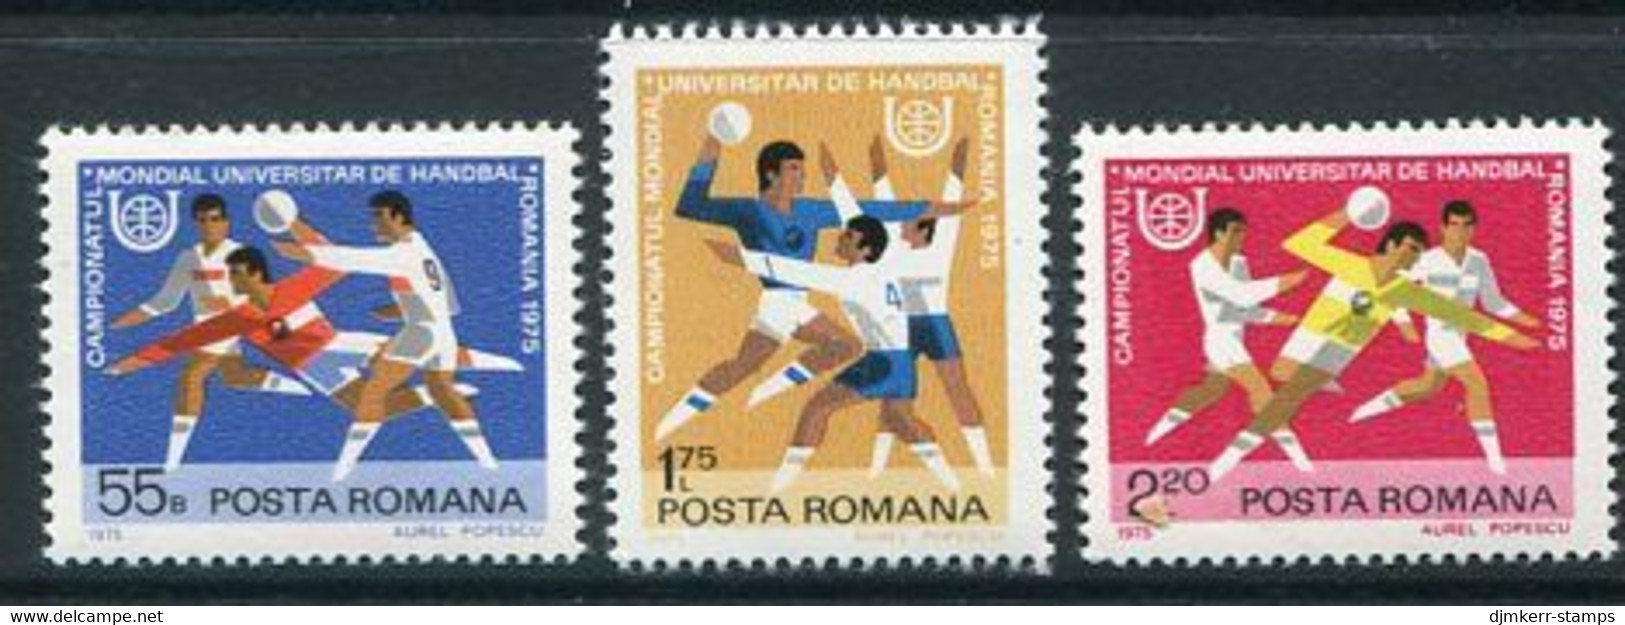 ROMANIA 1975 Student Handball Championship MNH  / **.  Michel 3244-49 - Ungebraucht